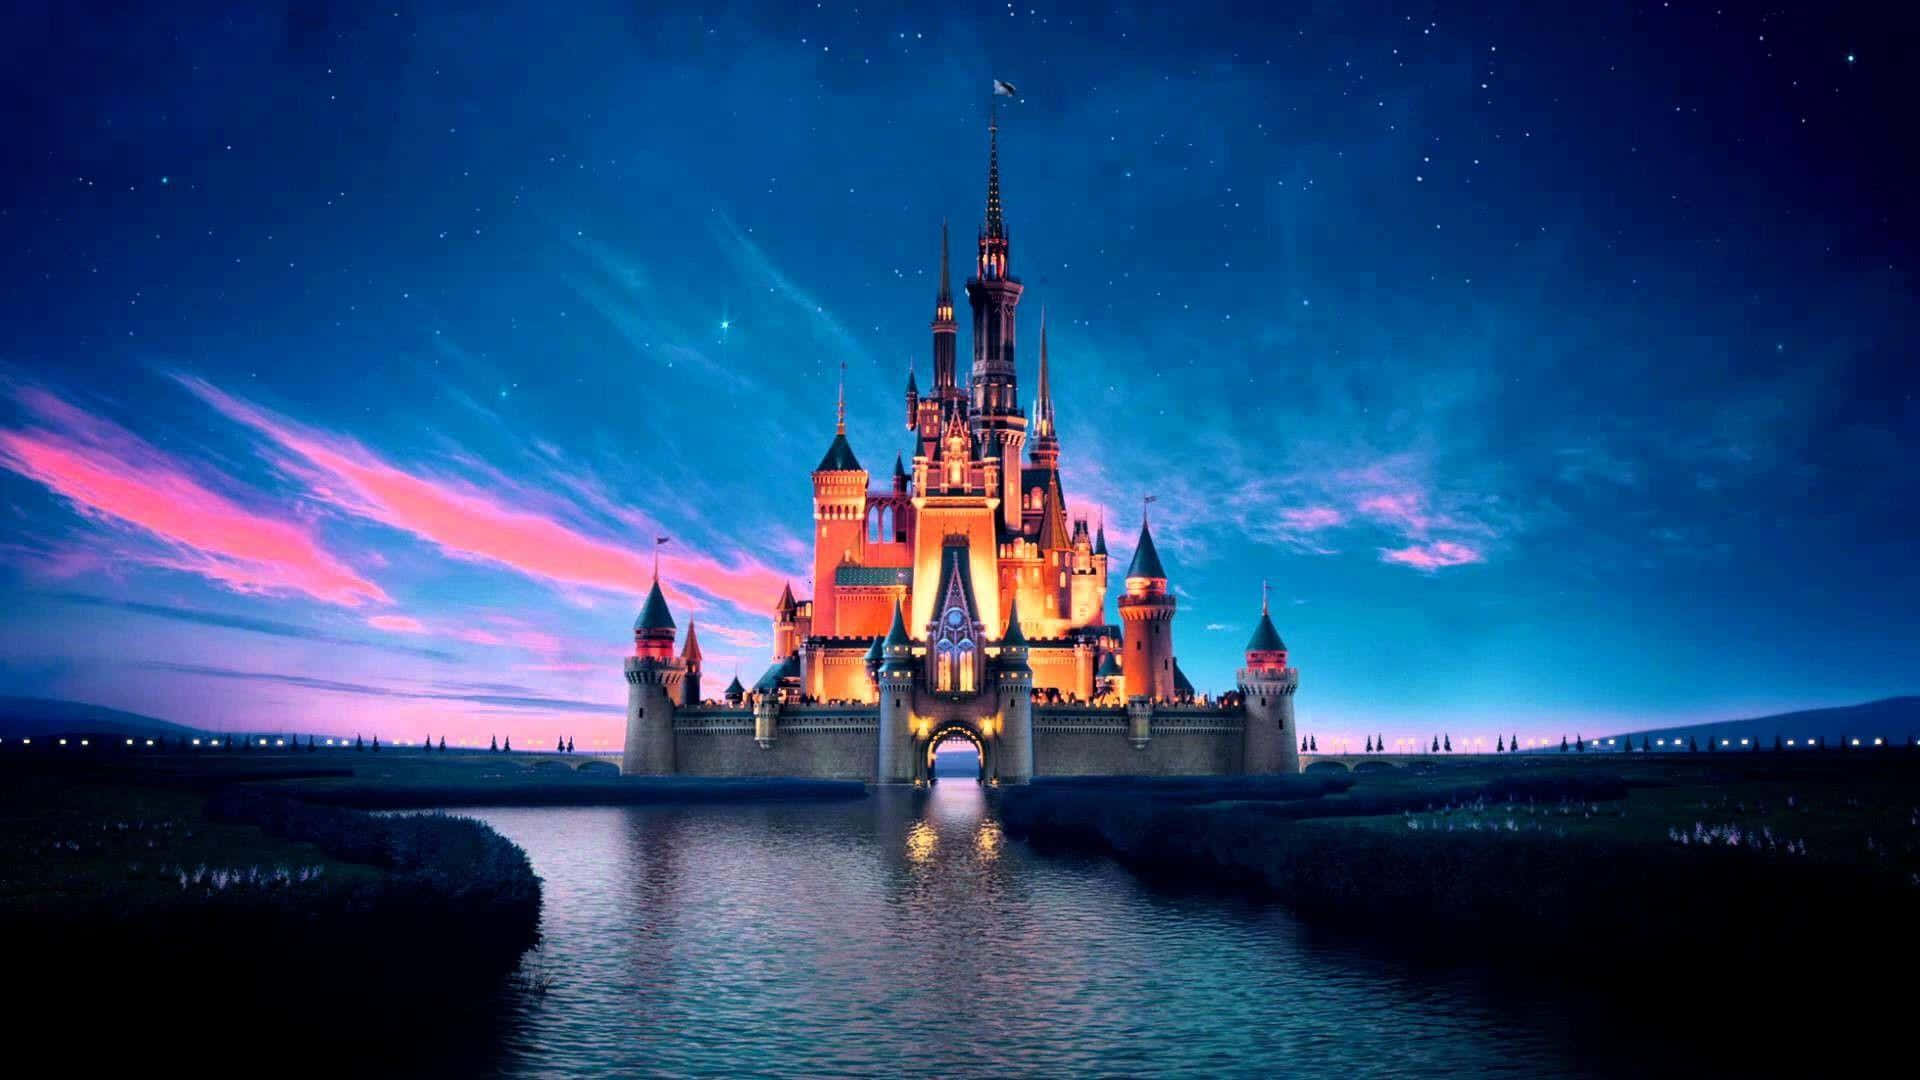 Disney World Wallpaper